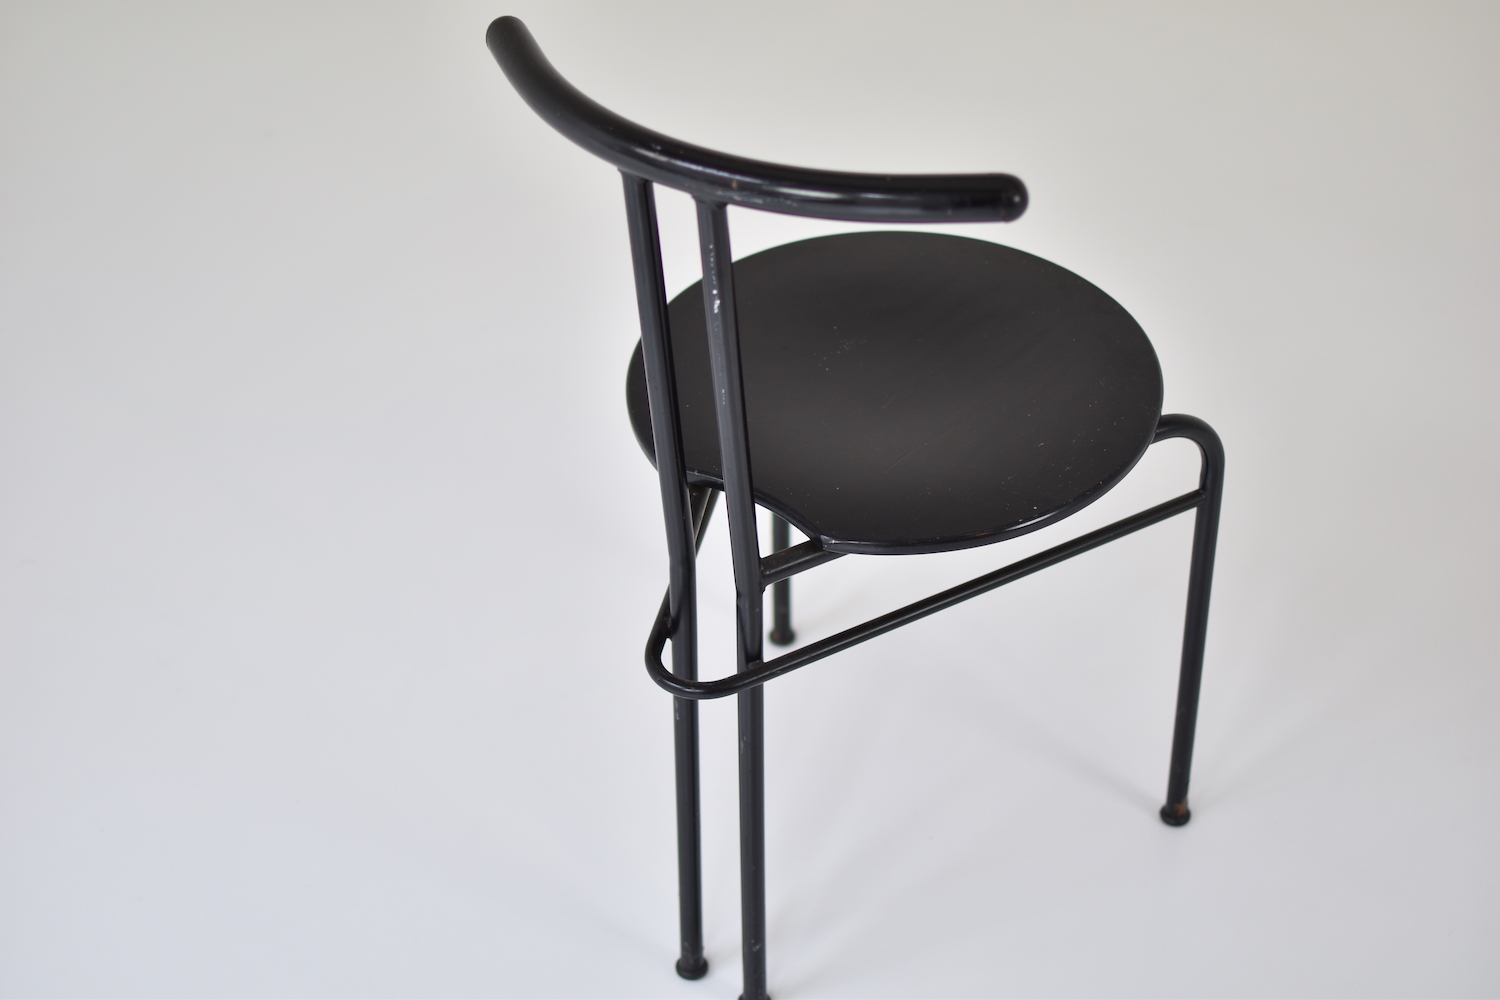 Modernist industrial chairs - Modern Living